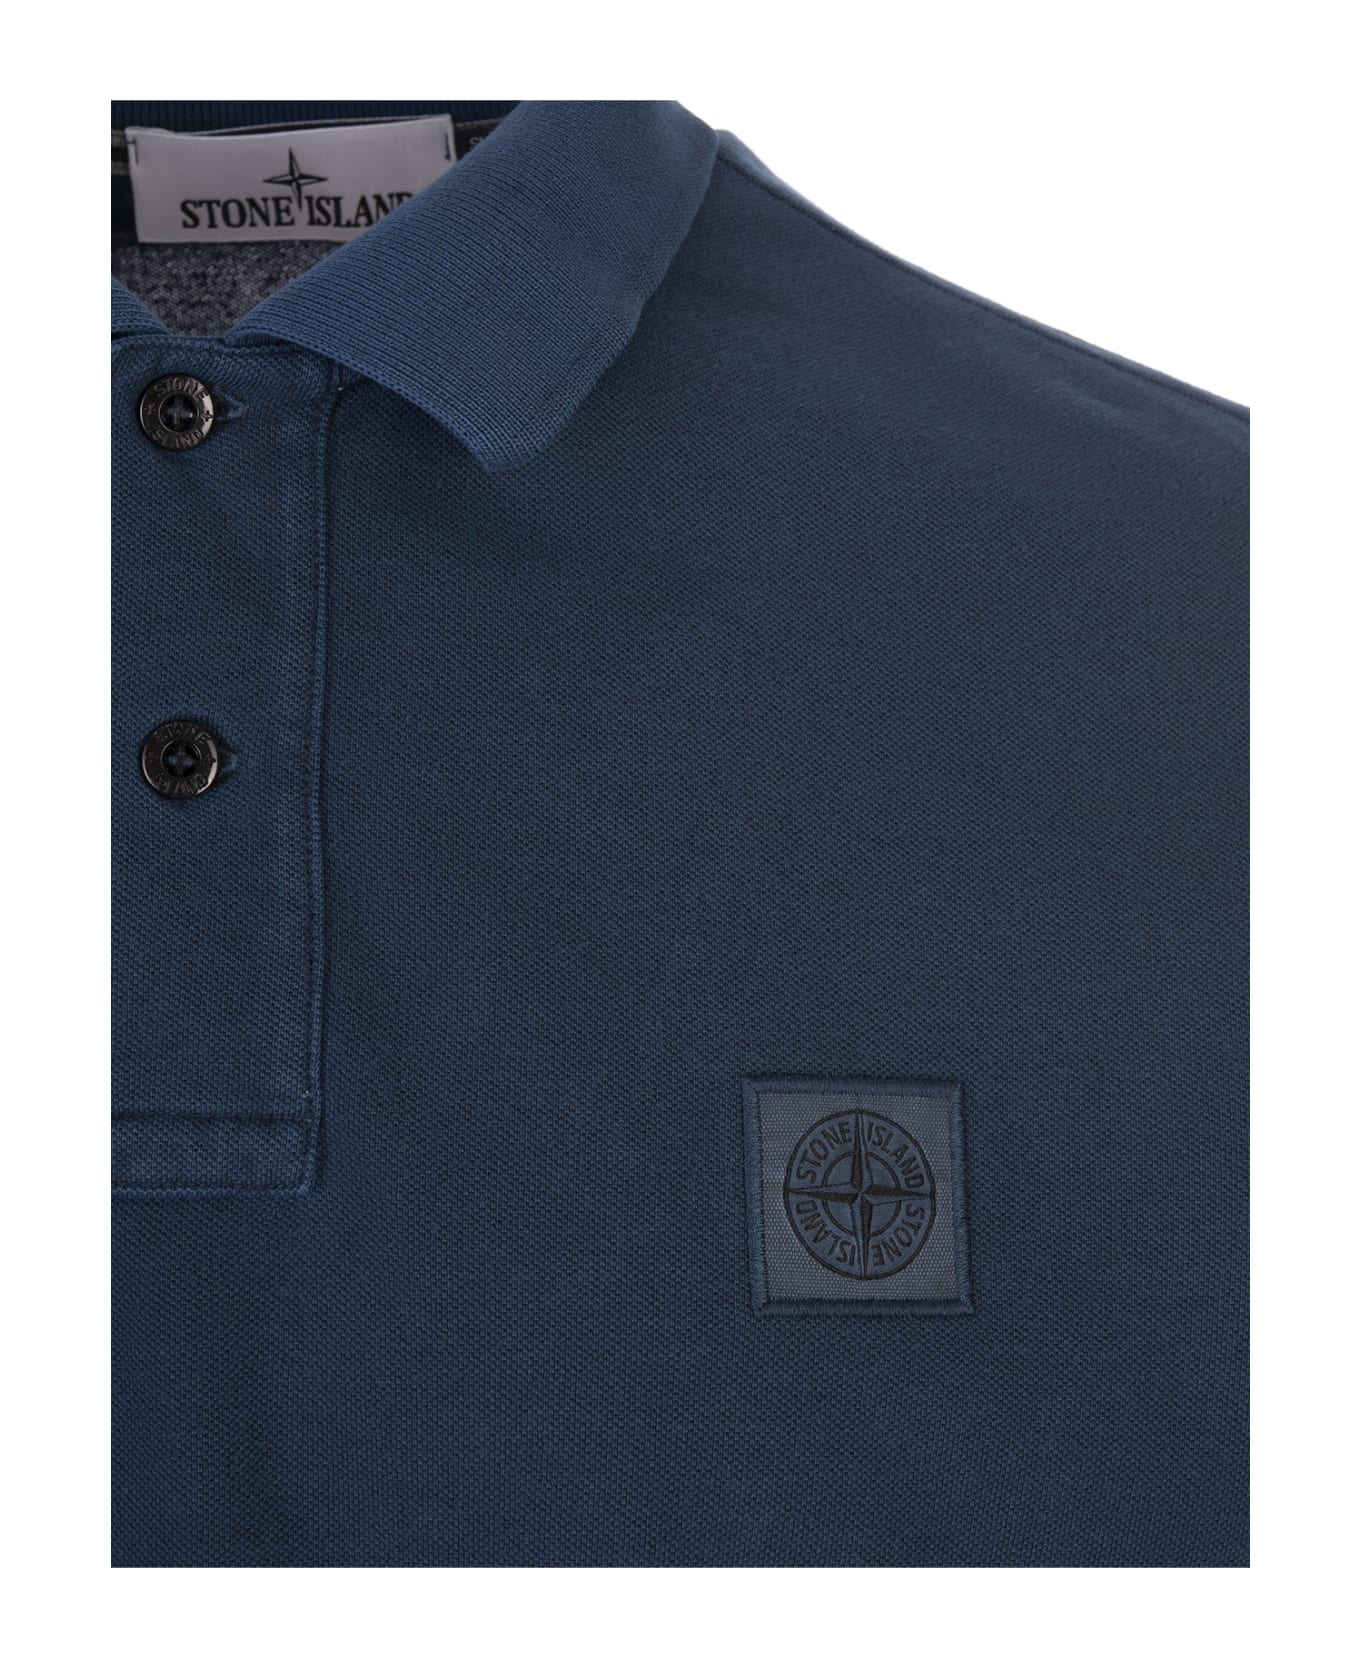 Stone Island Avio Blue Pigment Dyed Slim Fit Polo Shirt - Blue ポロシャツ